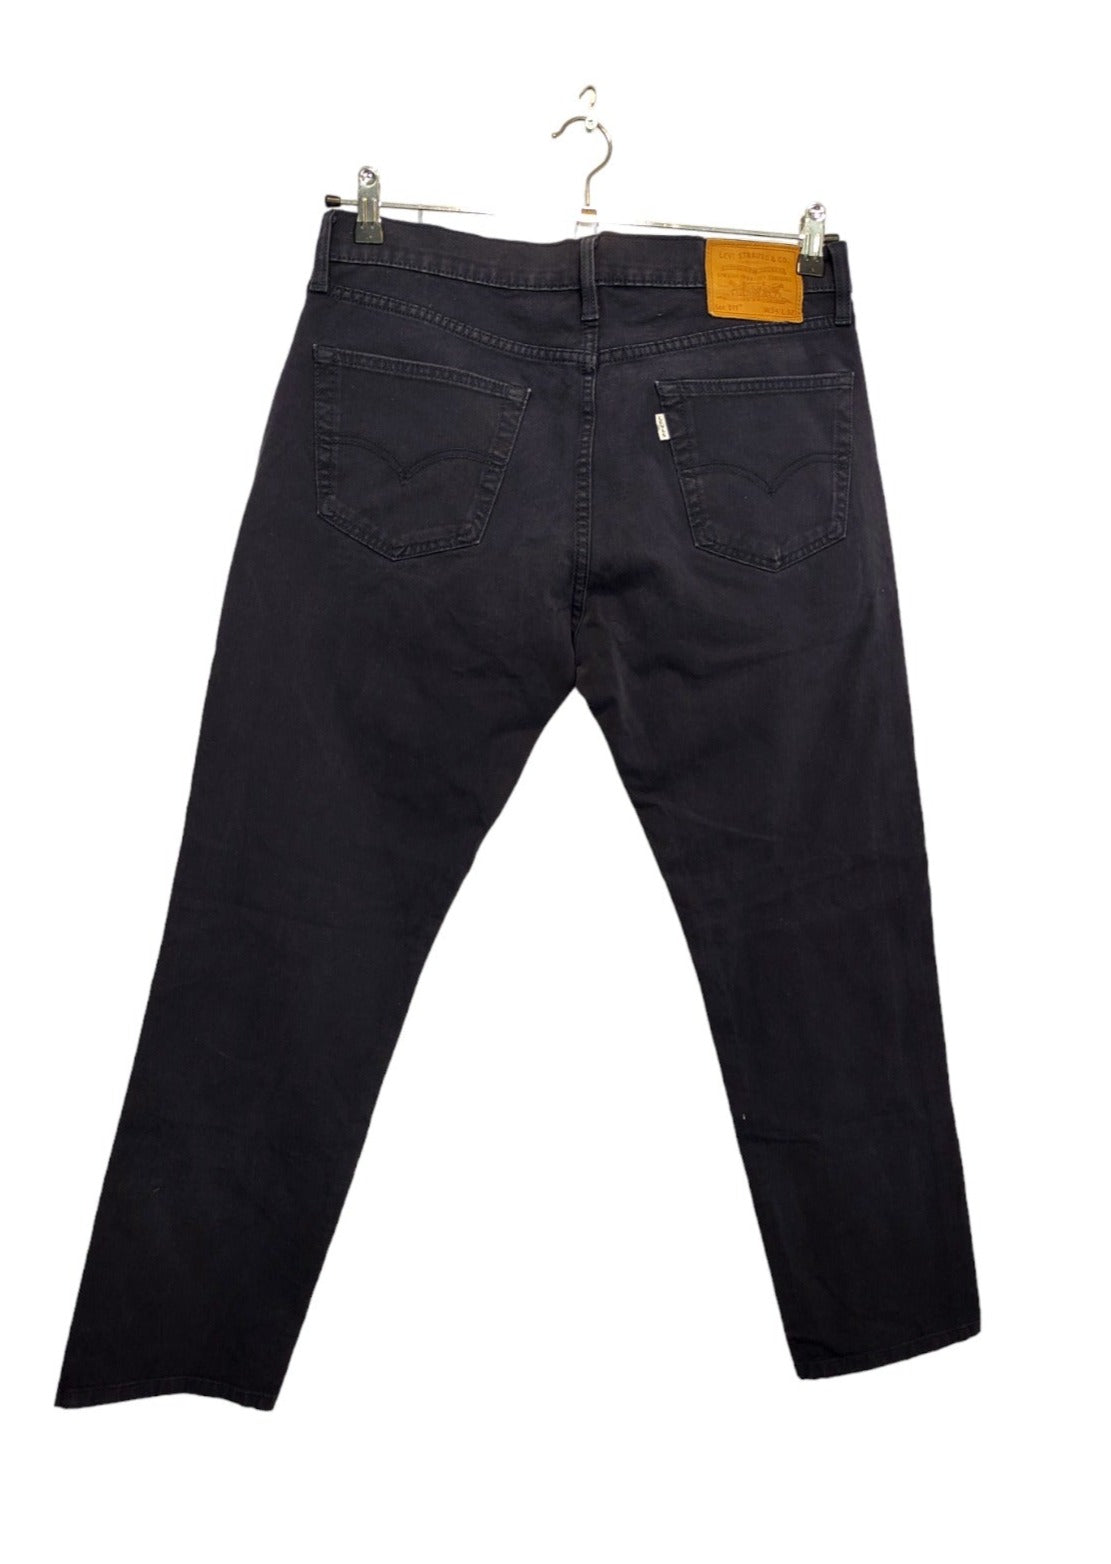 Aνδρικό Παντελόνι LEVI' S σε Σκούρο Μπλε χρώμα (No 34)